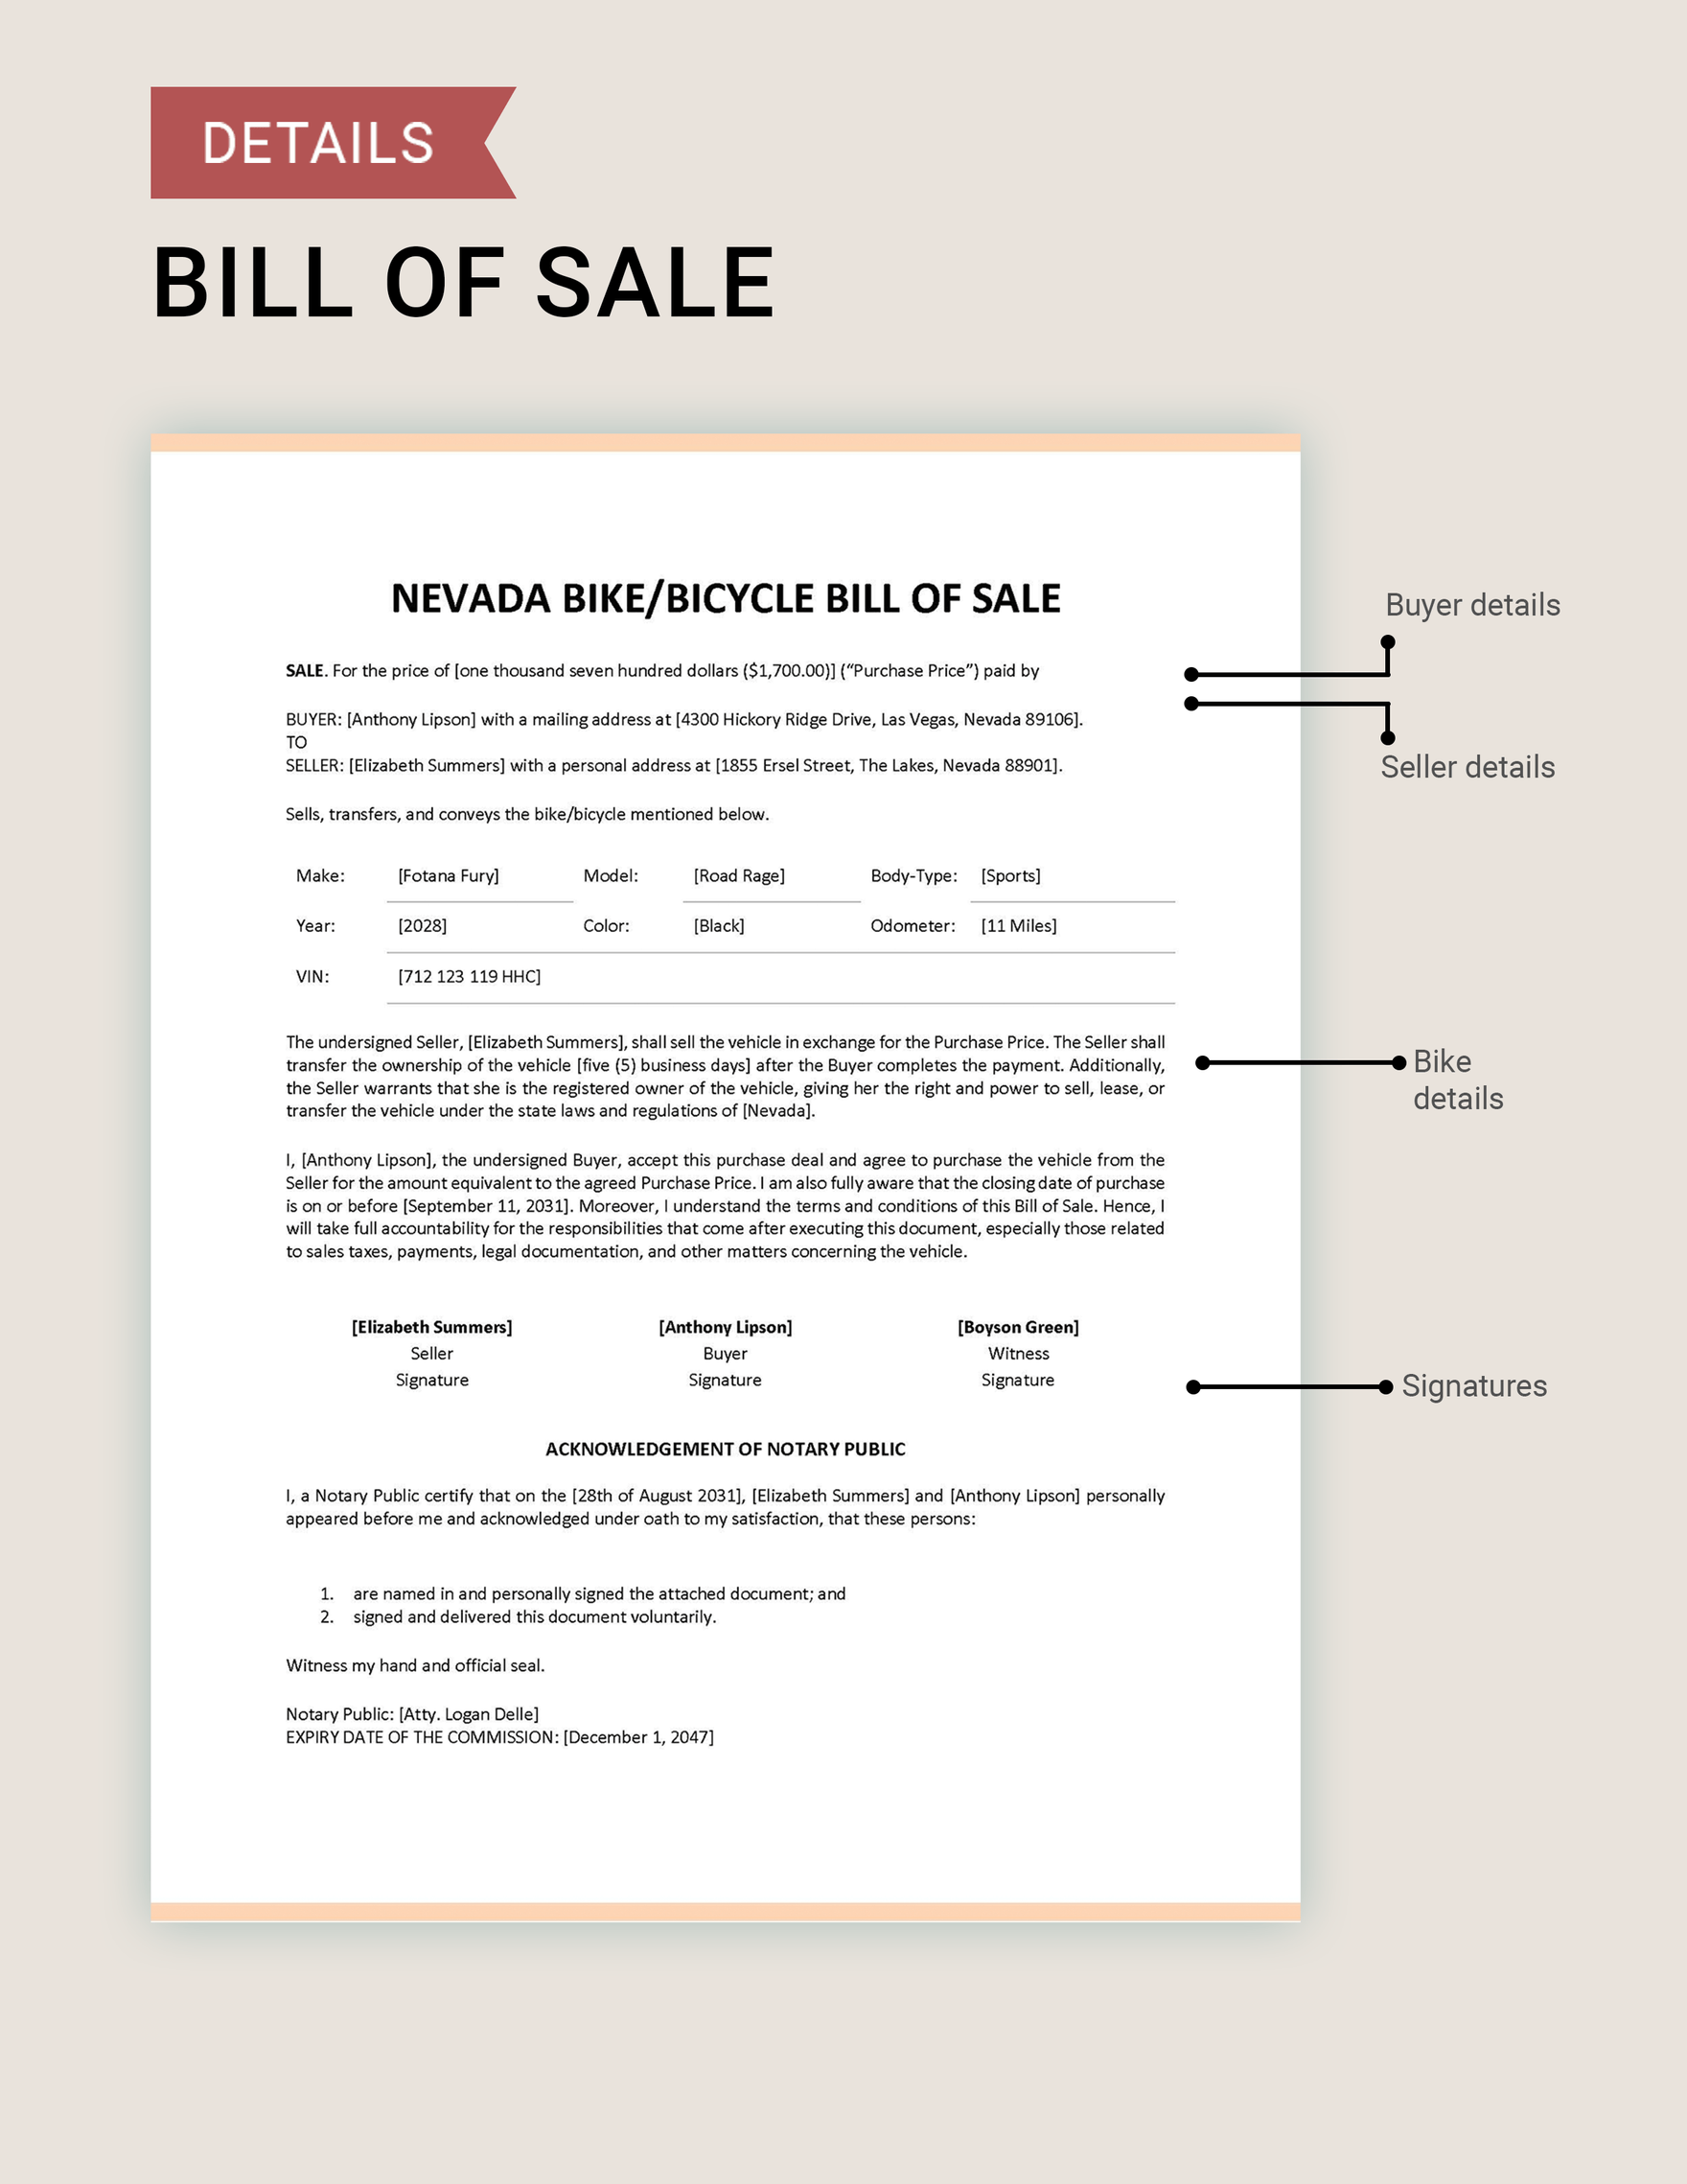 Nevada Bike/ Bicycle Bill of Sale Template